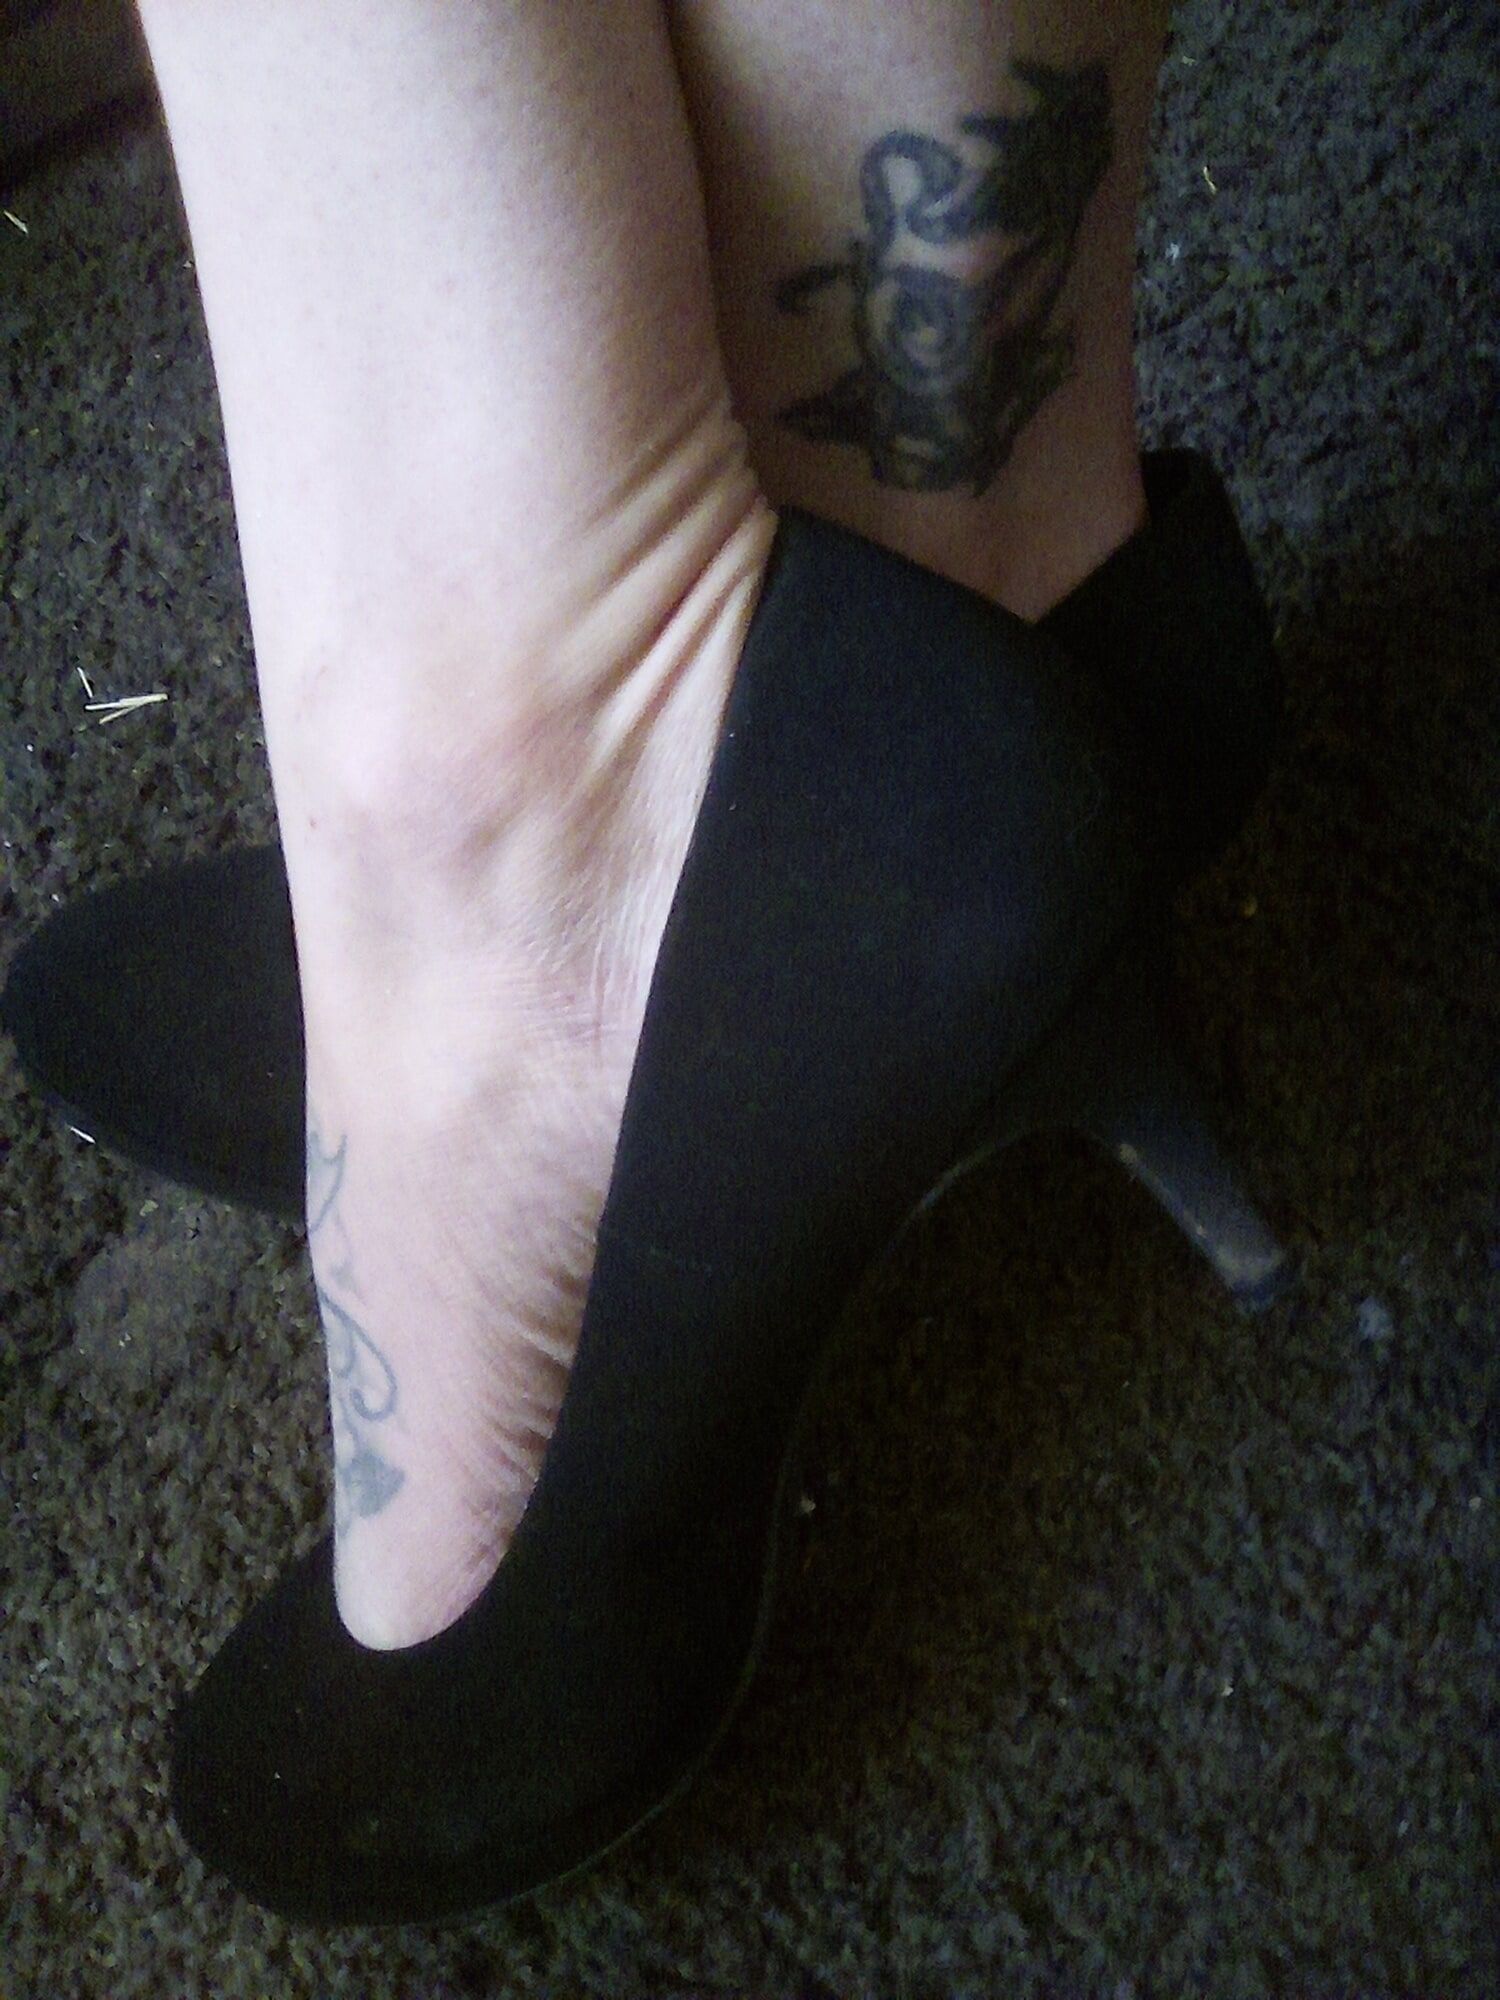 Tatted feet in heels